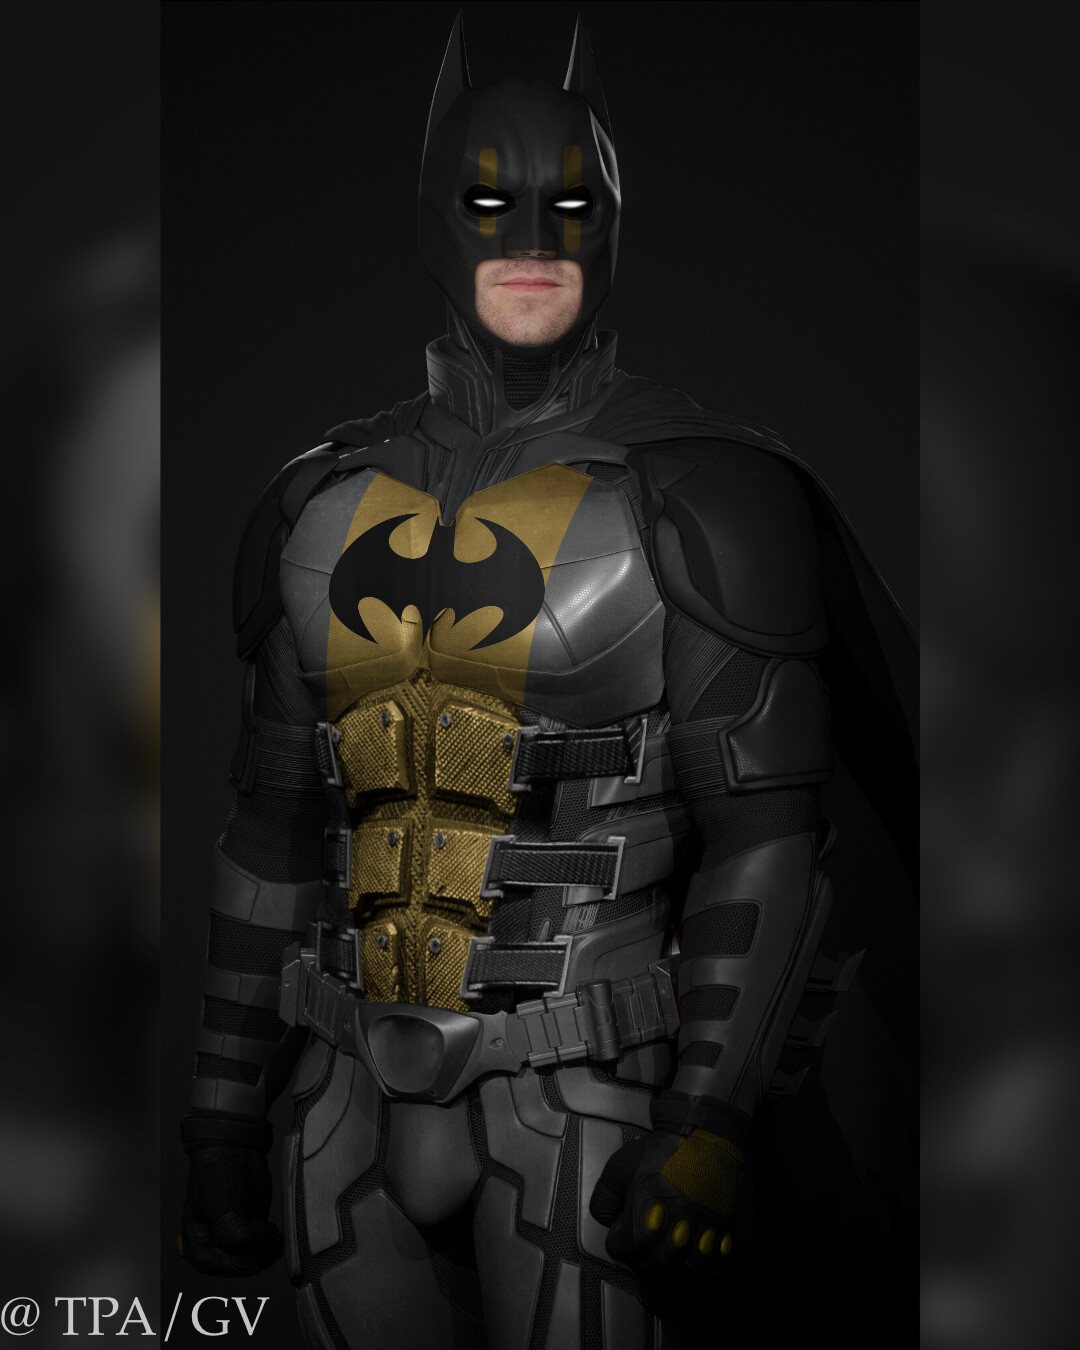 ArtStation - Armie Hammer as Batman